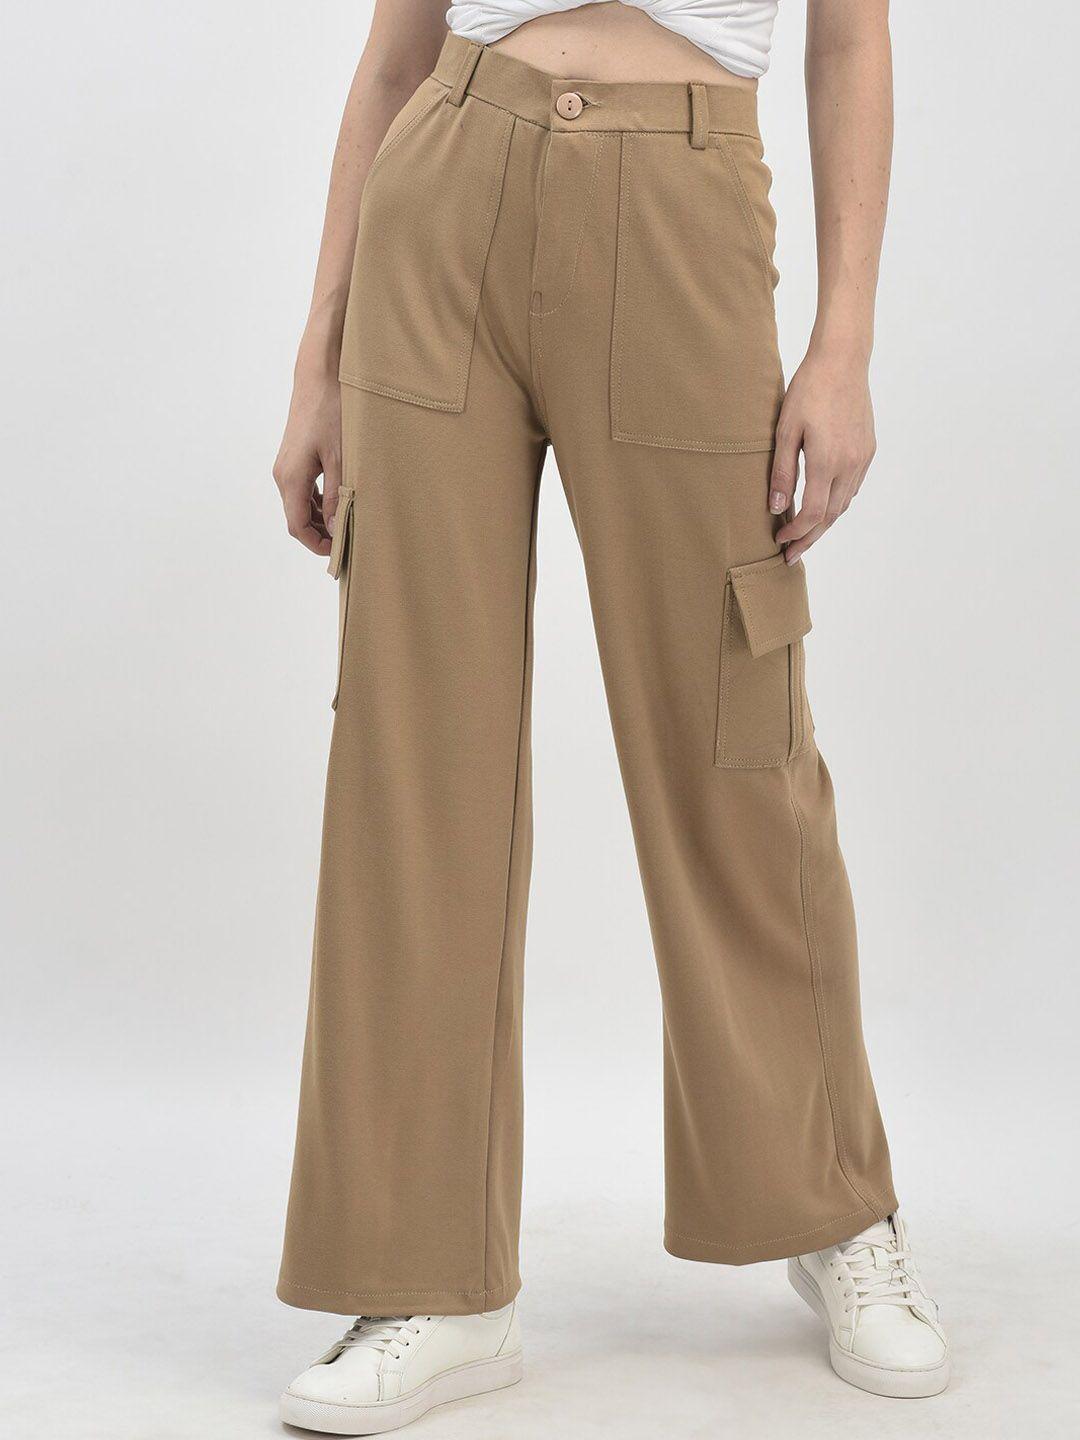 fnocks-women-relaxed-wide-leg-loose-fit-cotton-beige-cargos-trousers